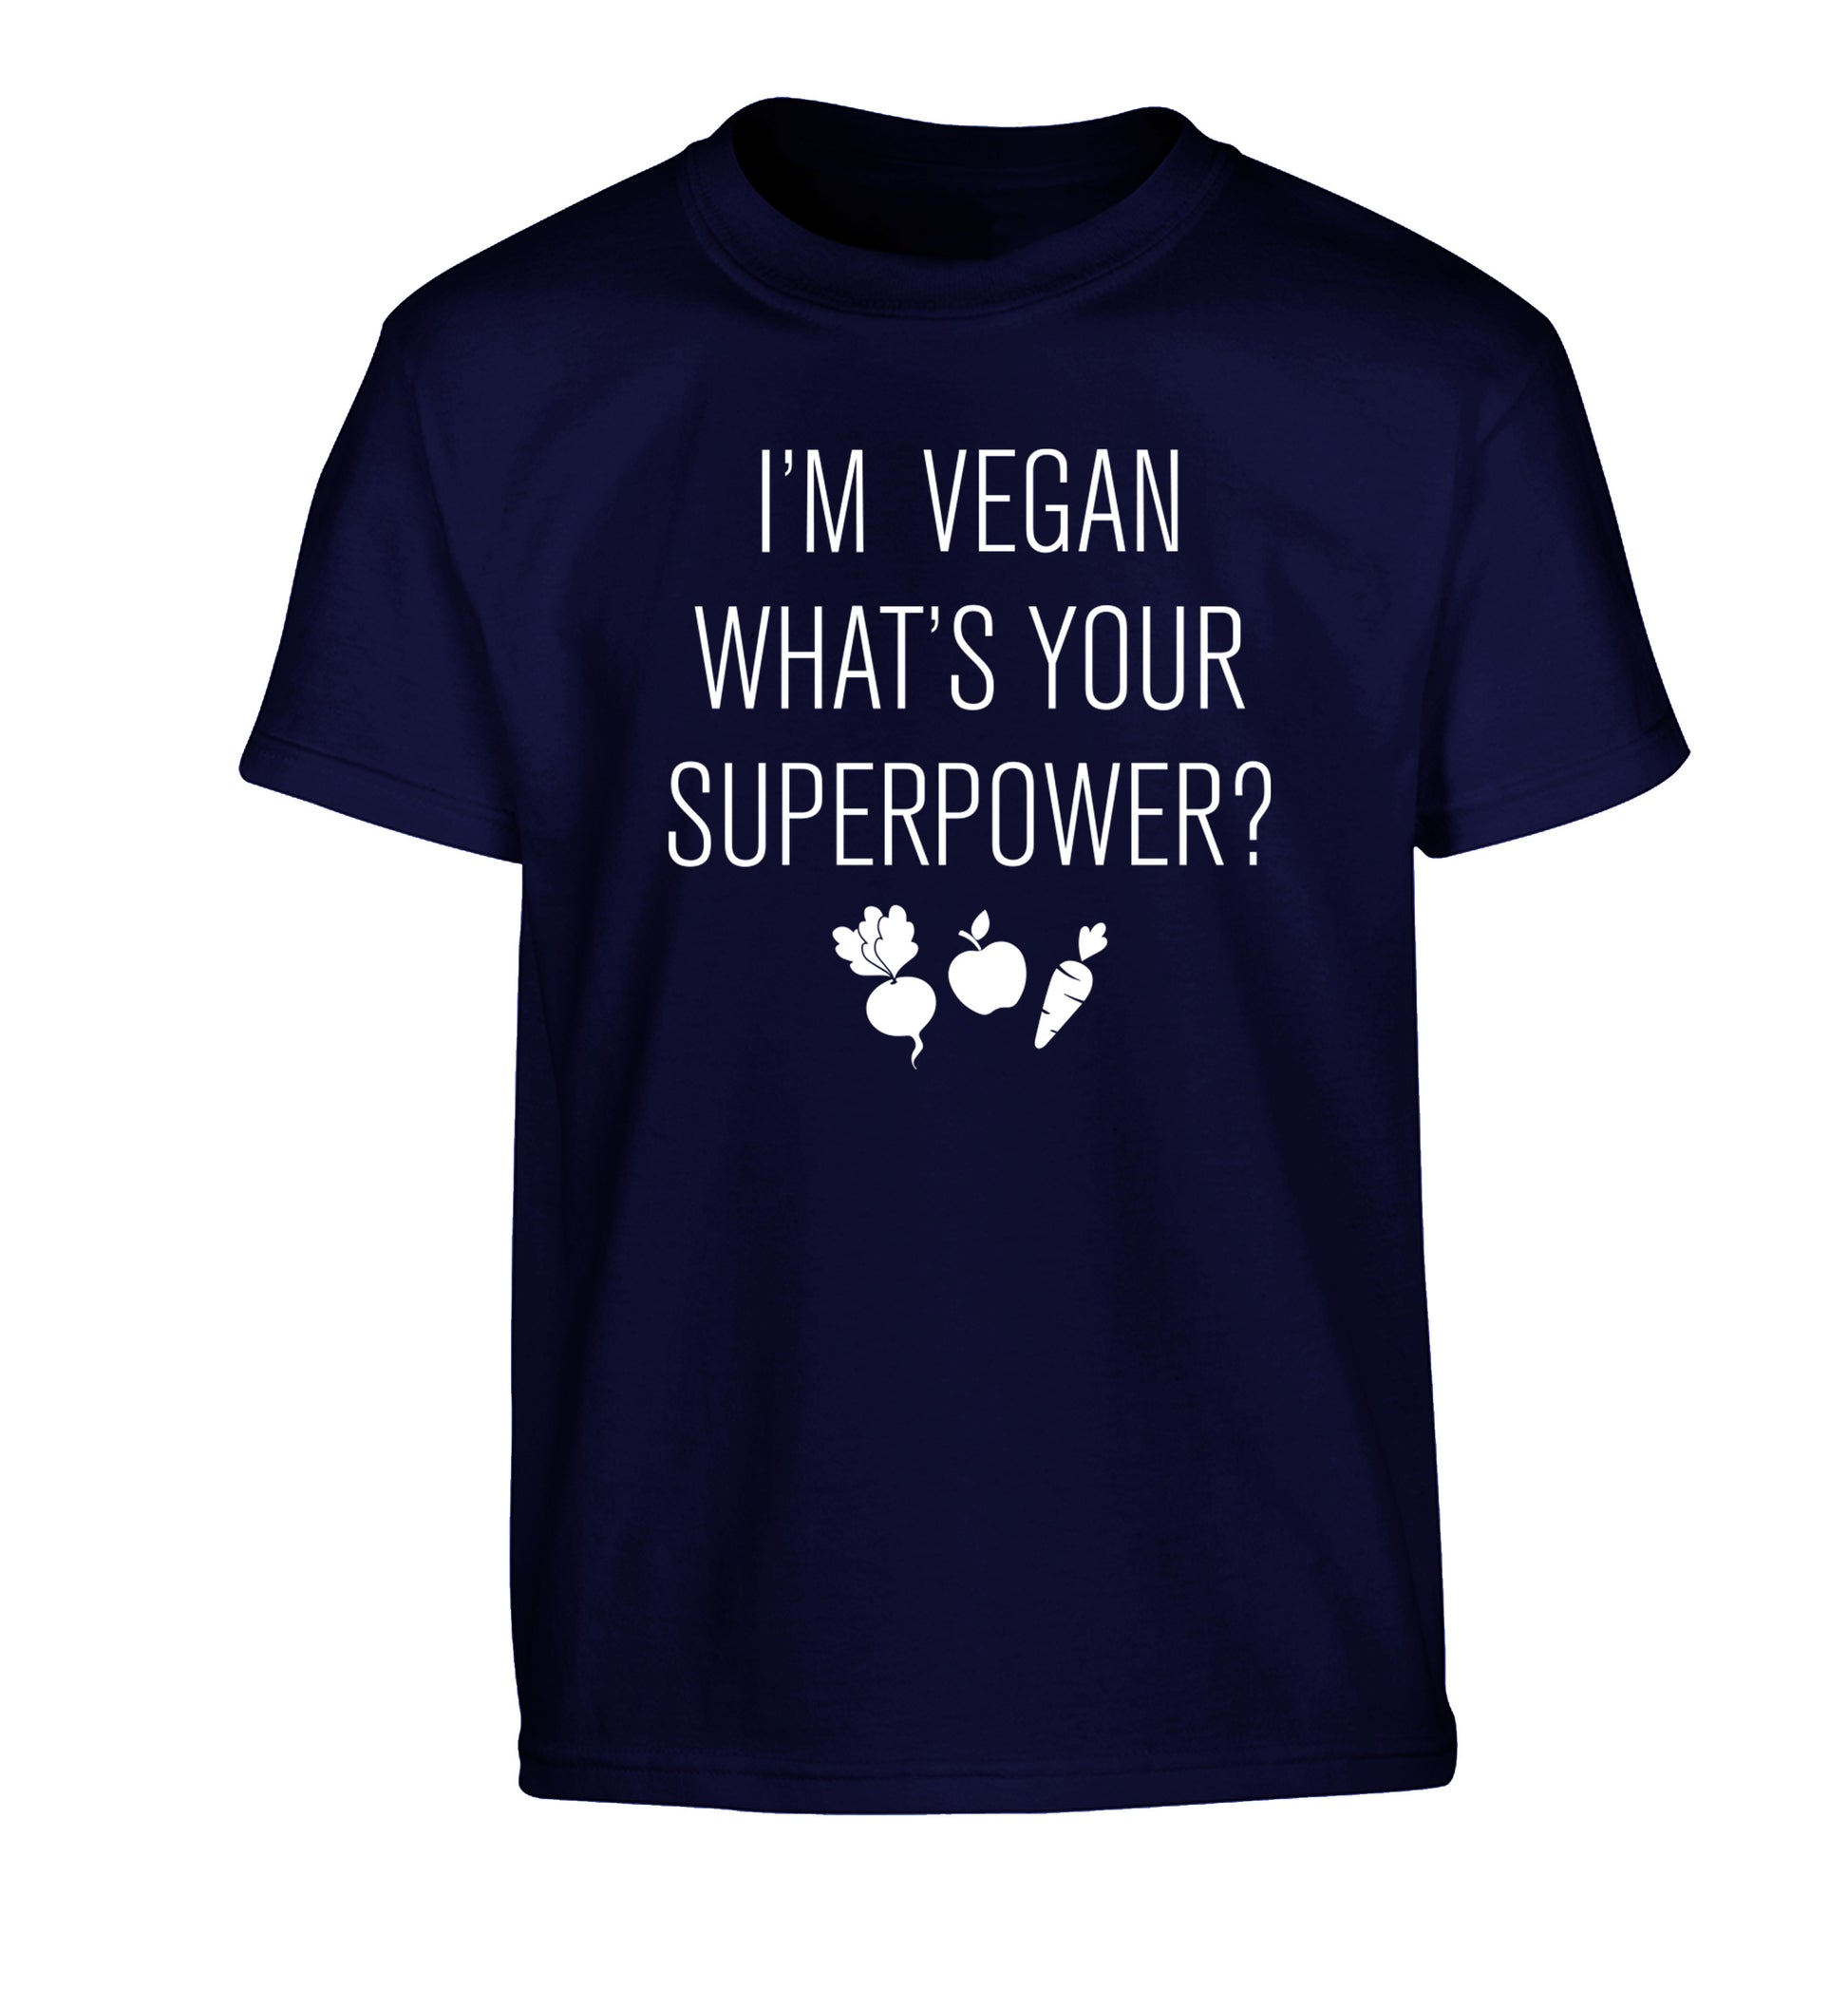 I'm Vegan What's Your Superpower? Children's navy Tshirt 12-13 Years